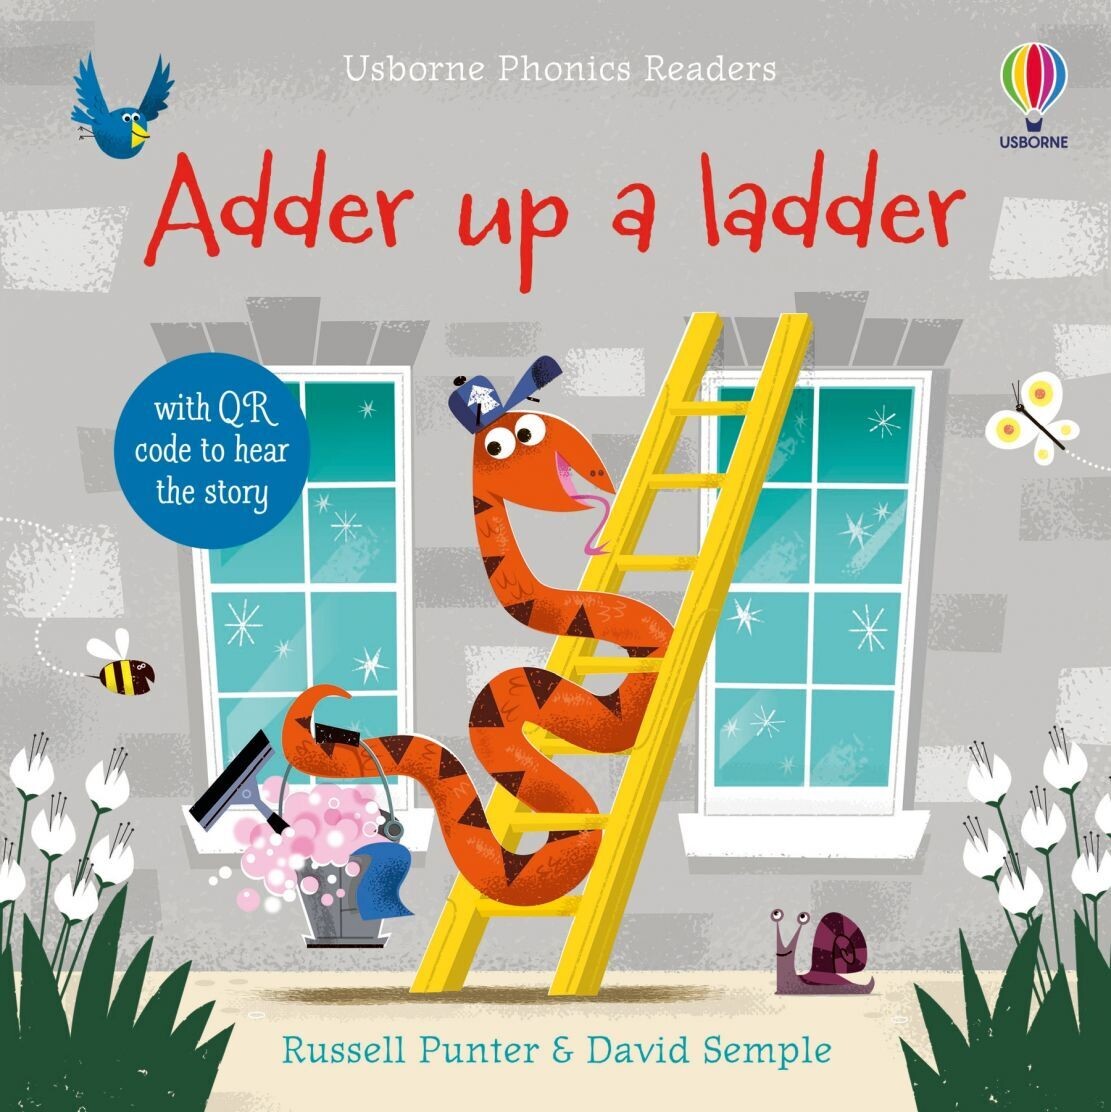 Usborne Adder up a Ladder